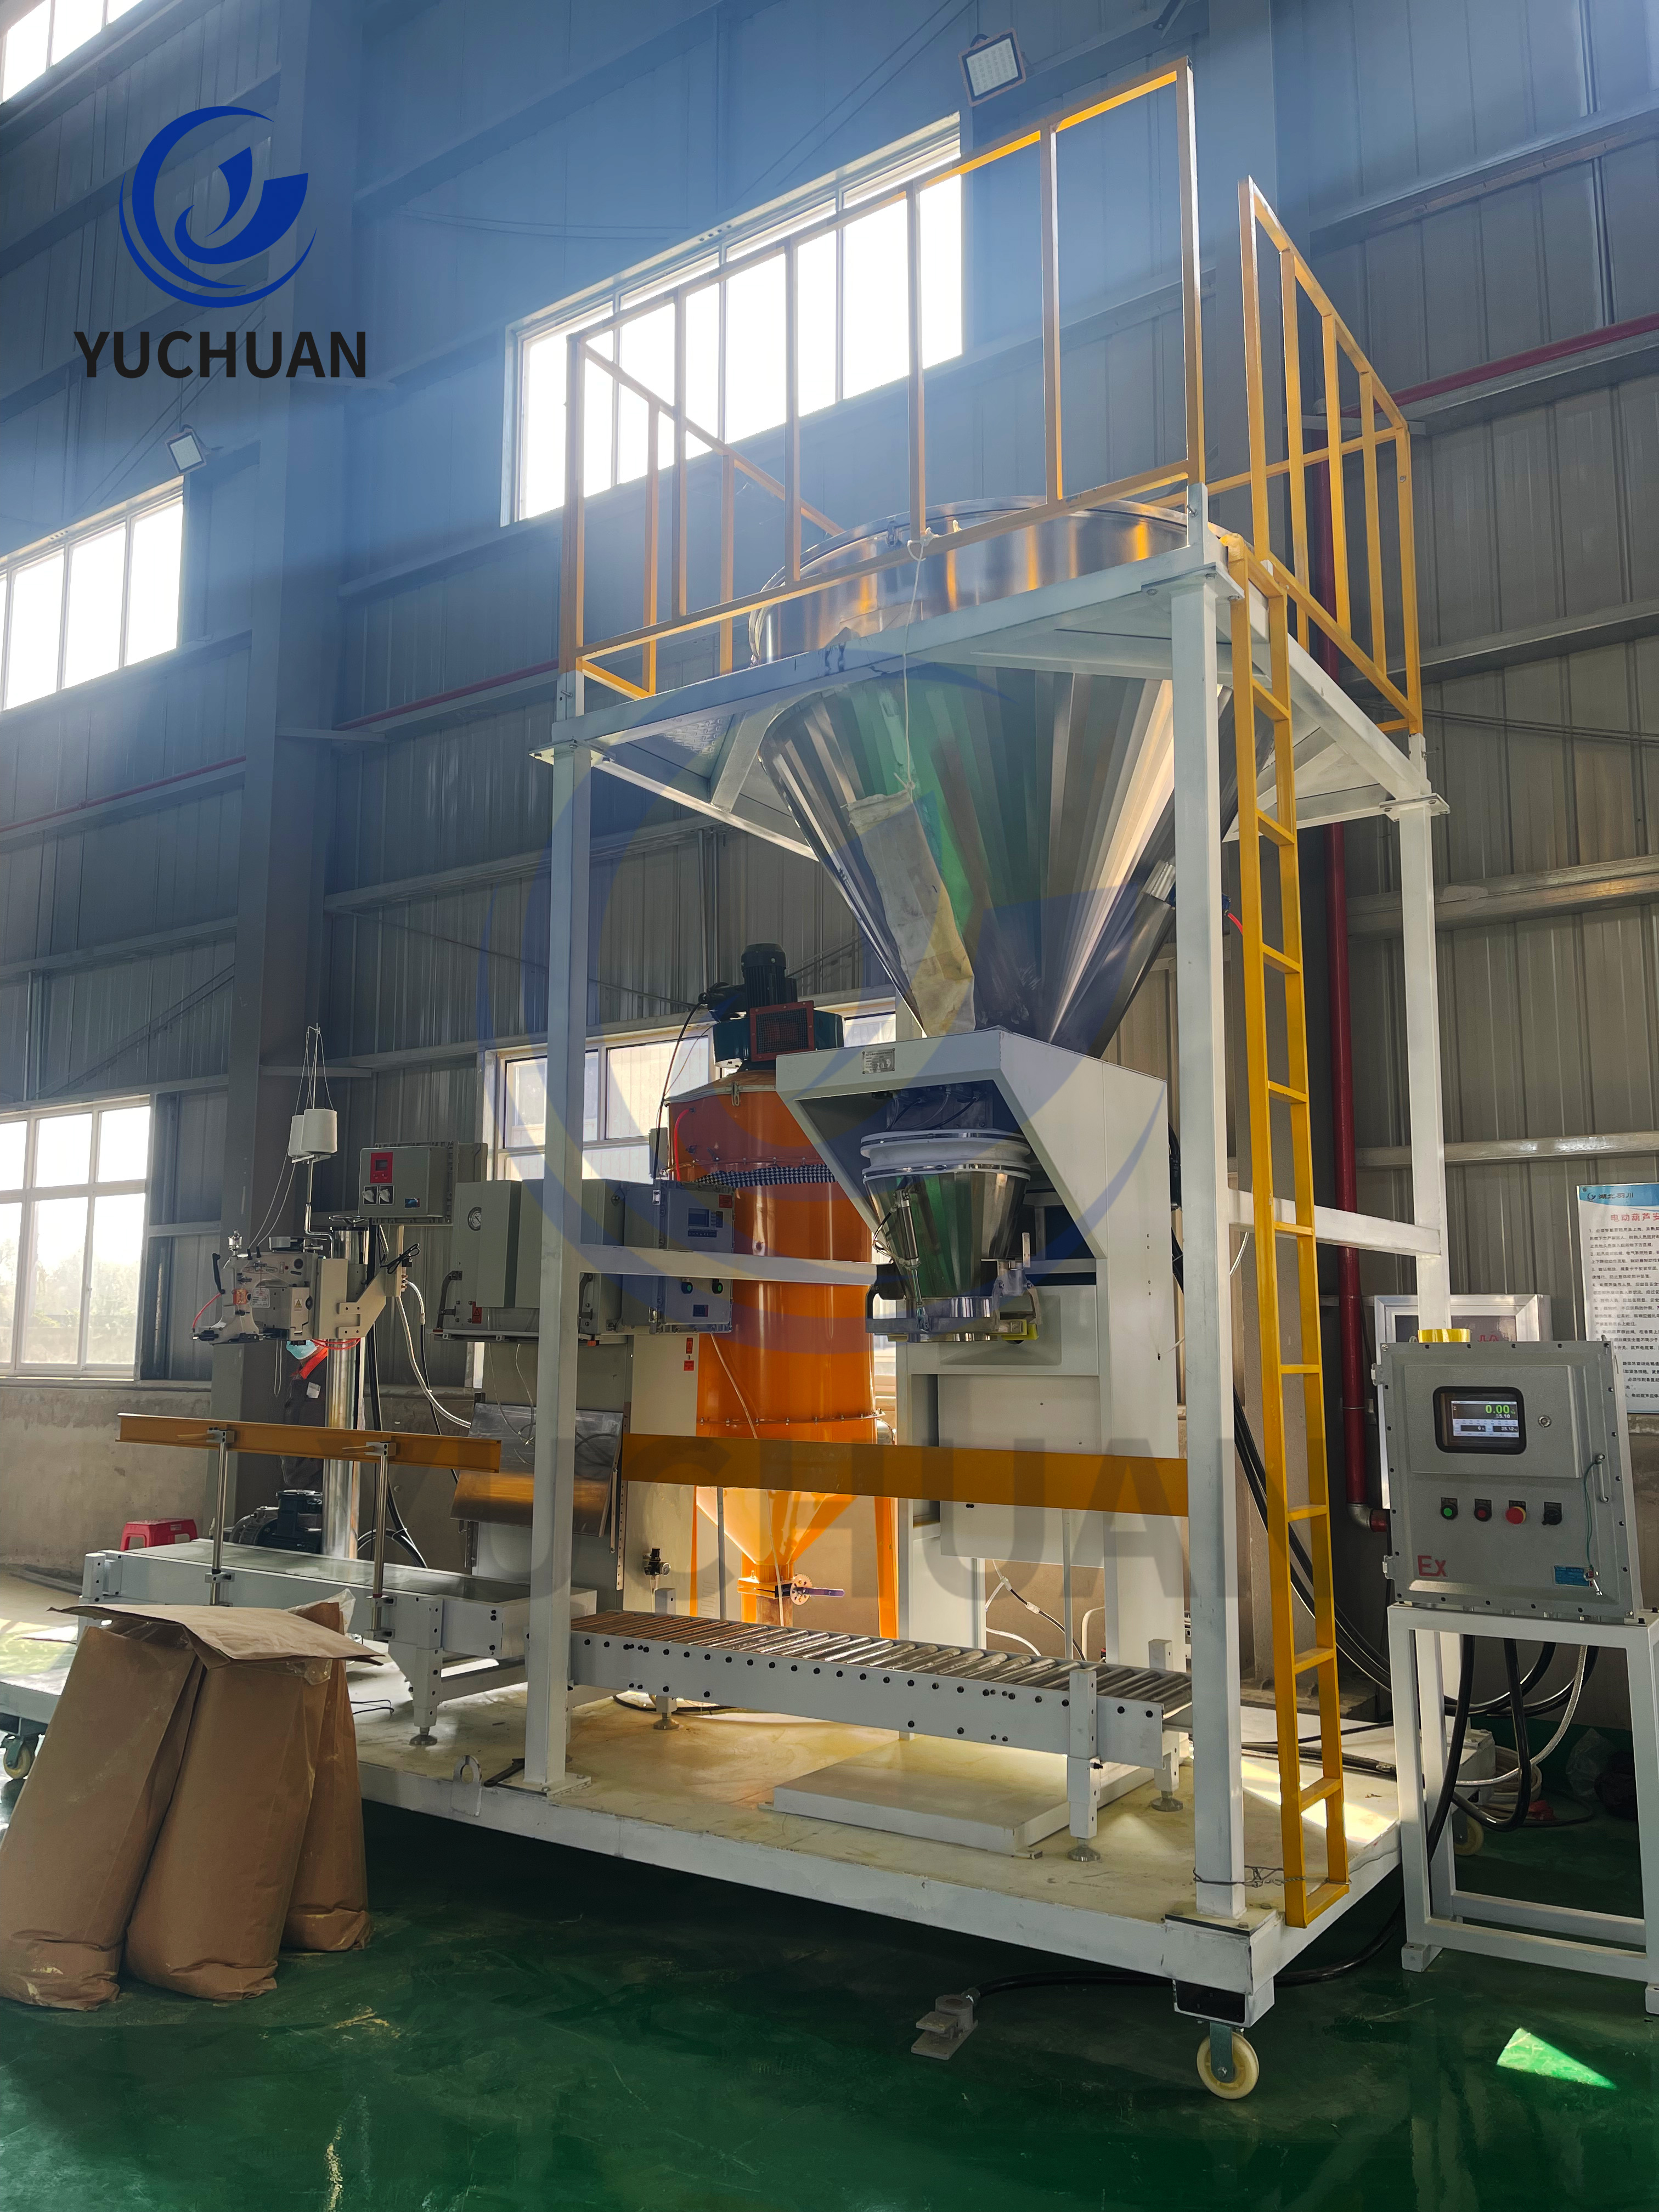 Hubei Yuchuan Manufacturer Display